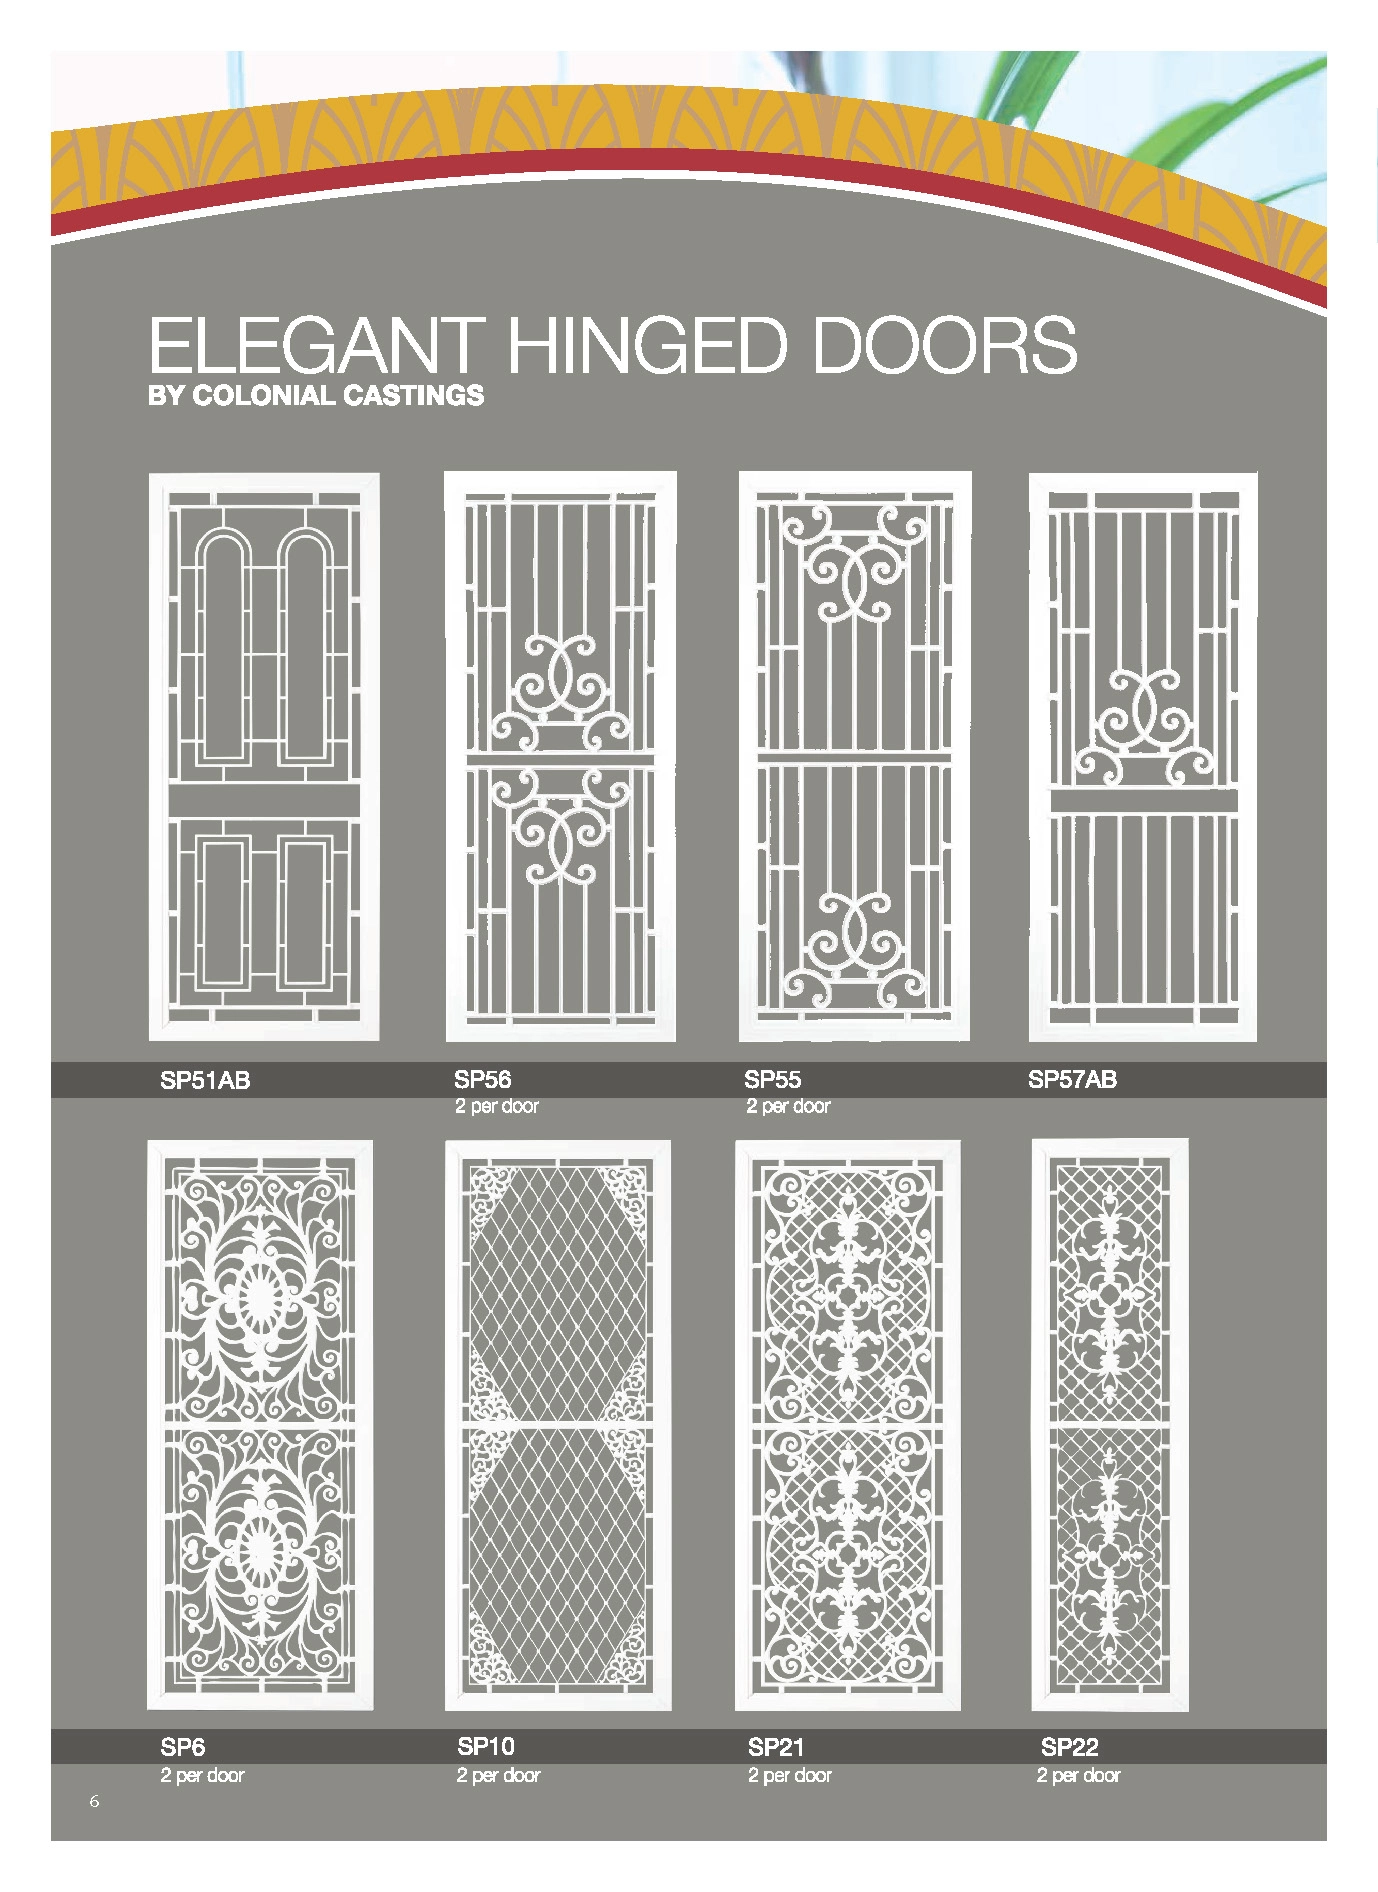 Elegant hinged doors with intricate details